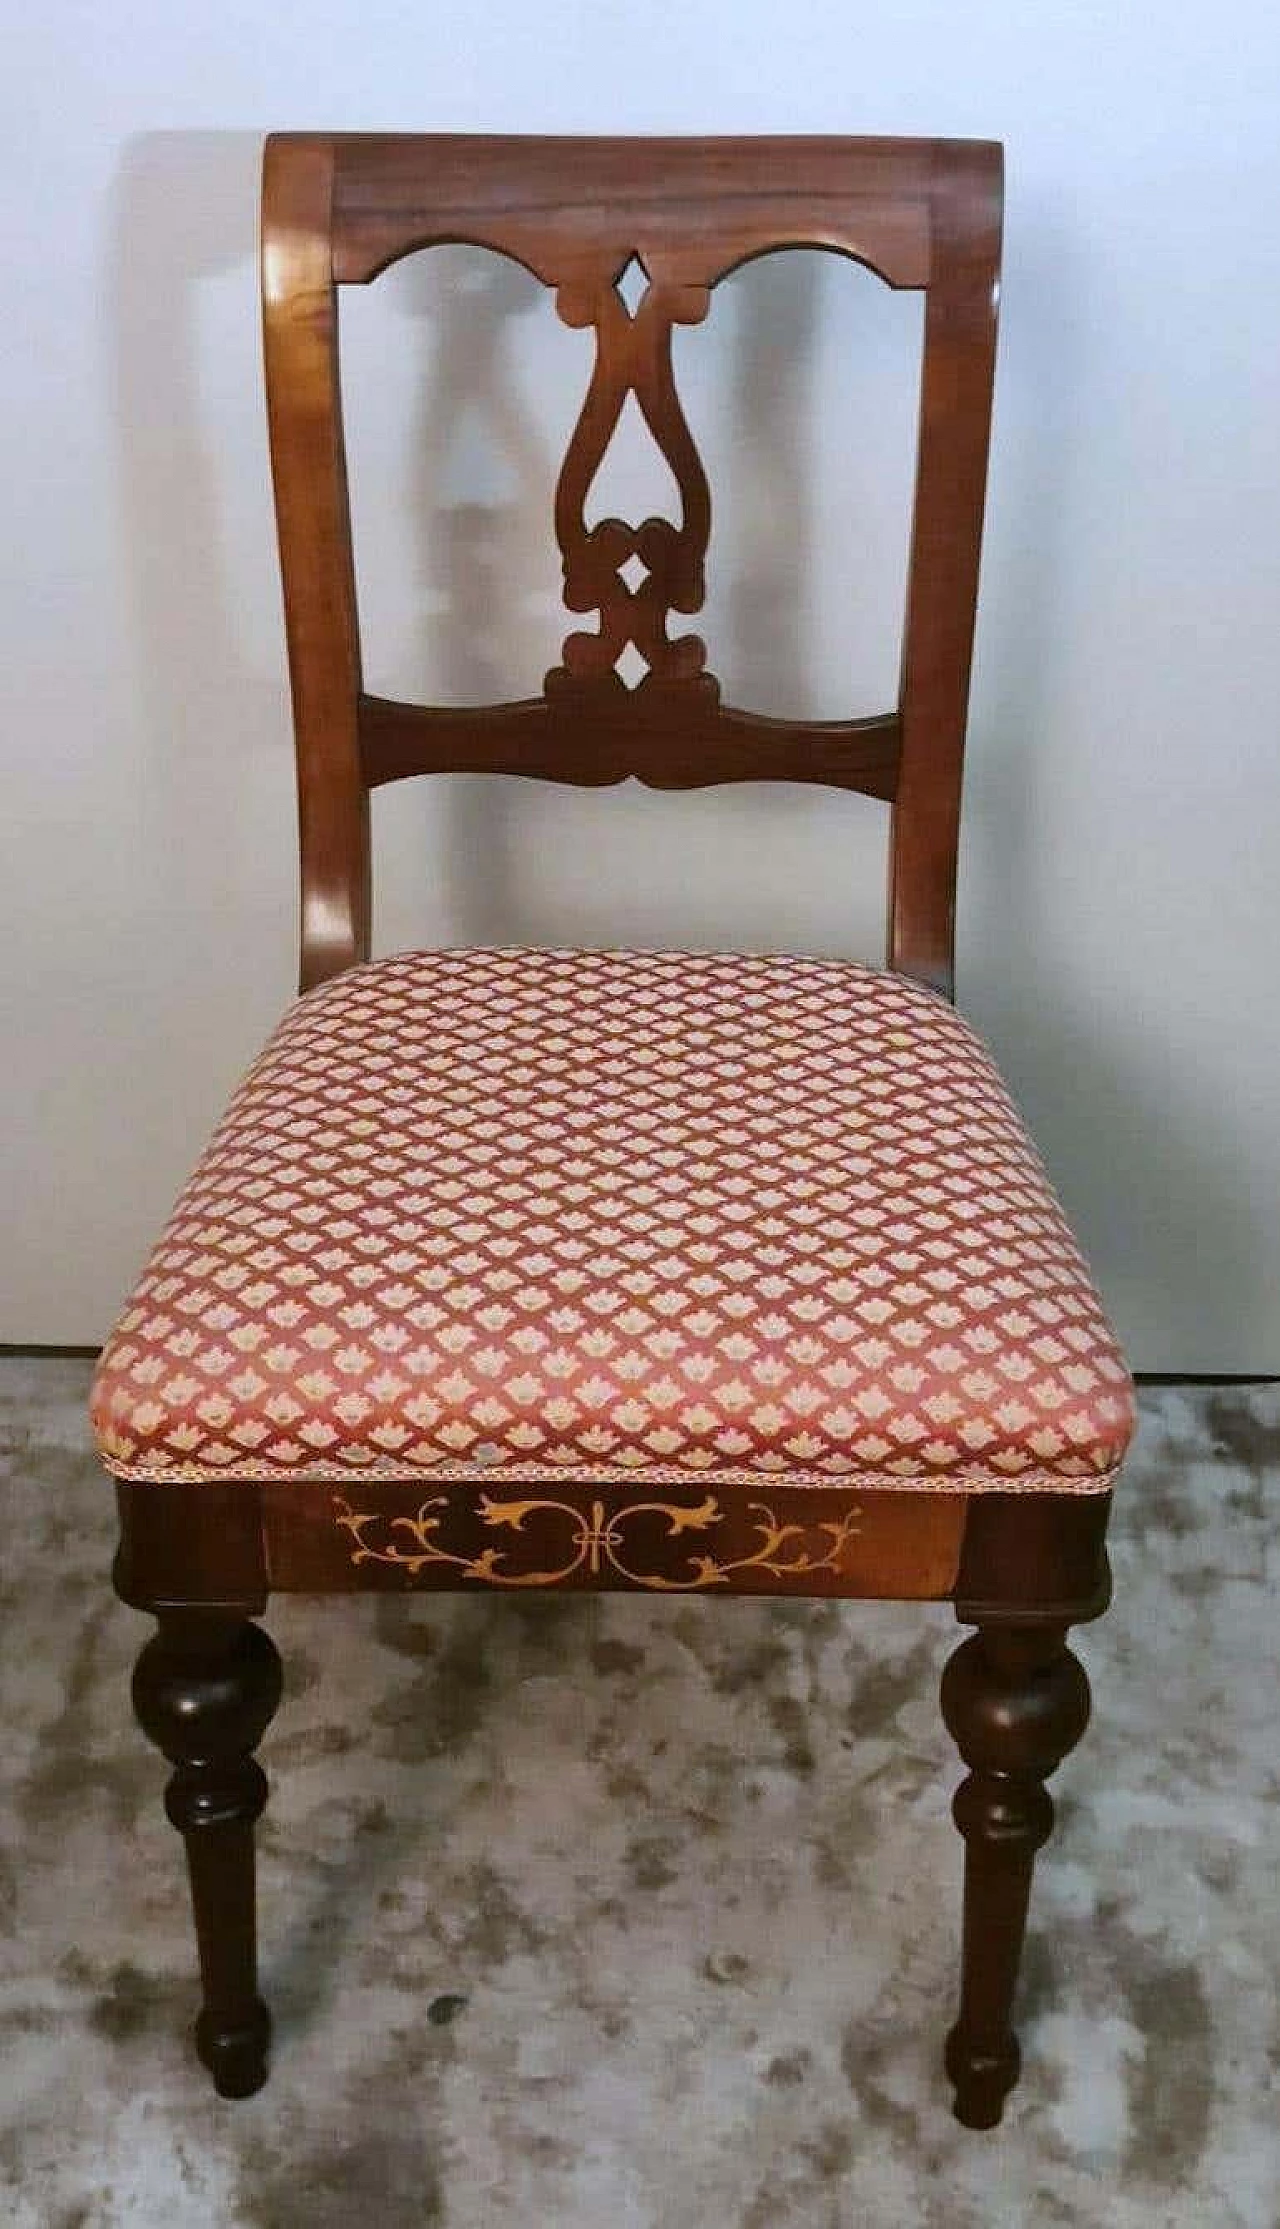 4 Sedie in legno e tessuto in stile Biedermeier, metà '800 10